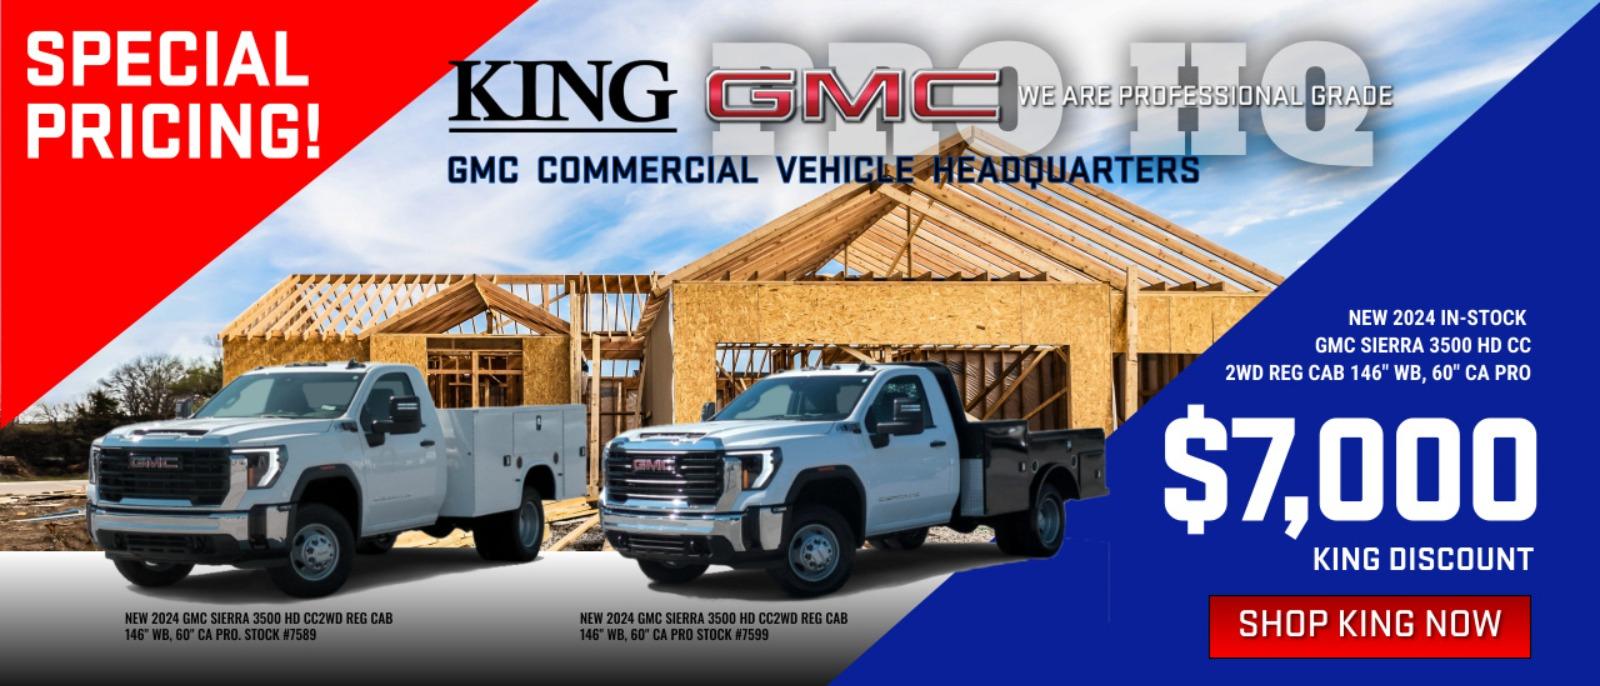 GMC Commercial Vehicle Headquarter